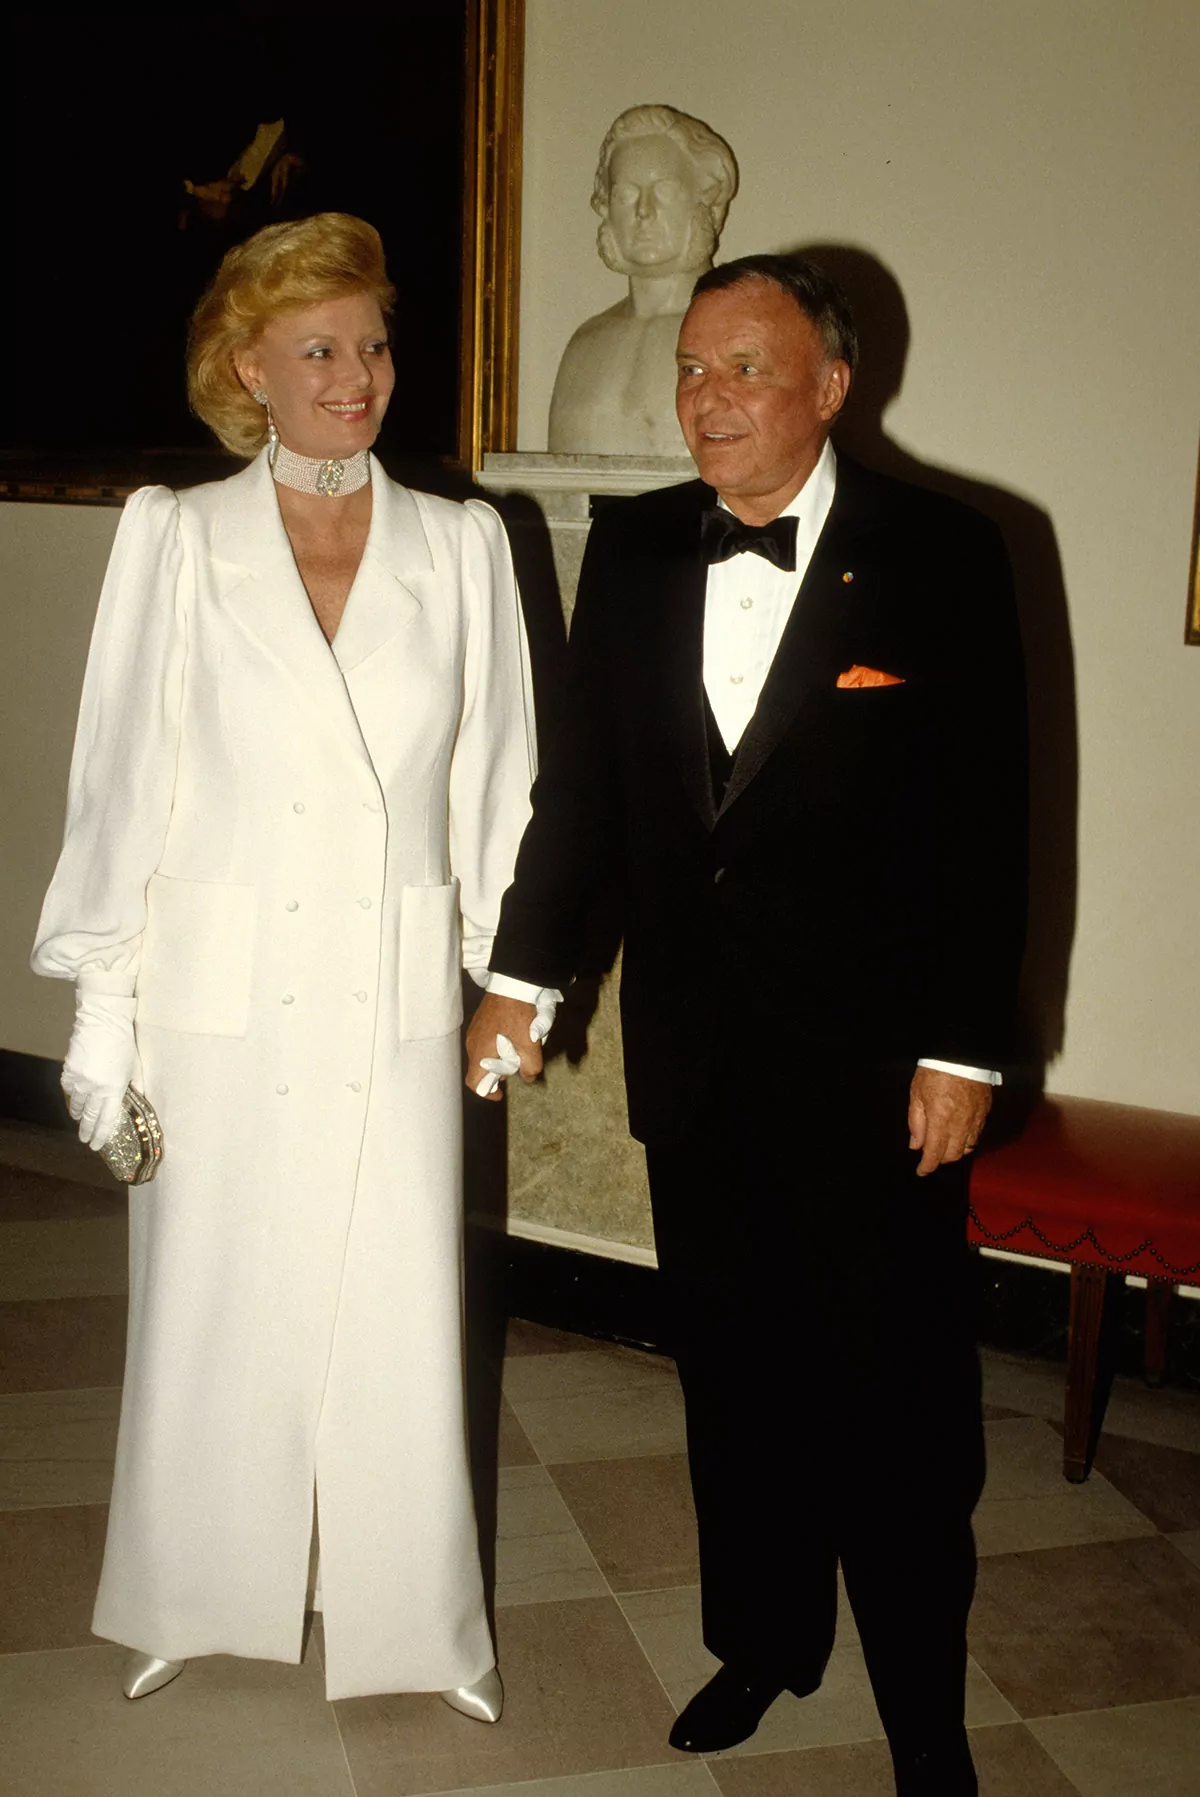 Frank and Barbara Sinatra